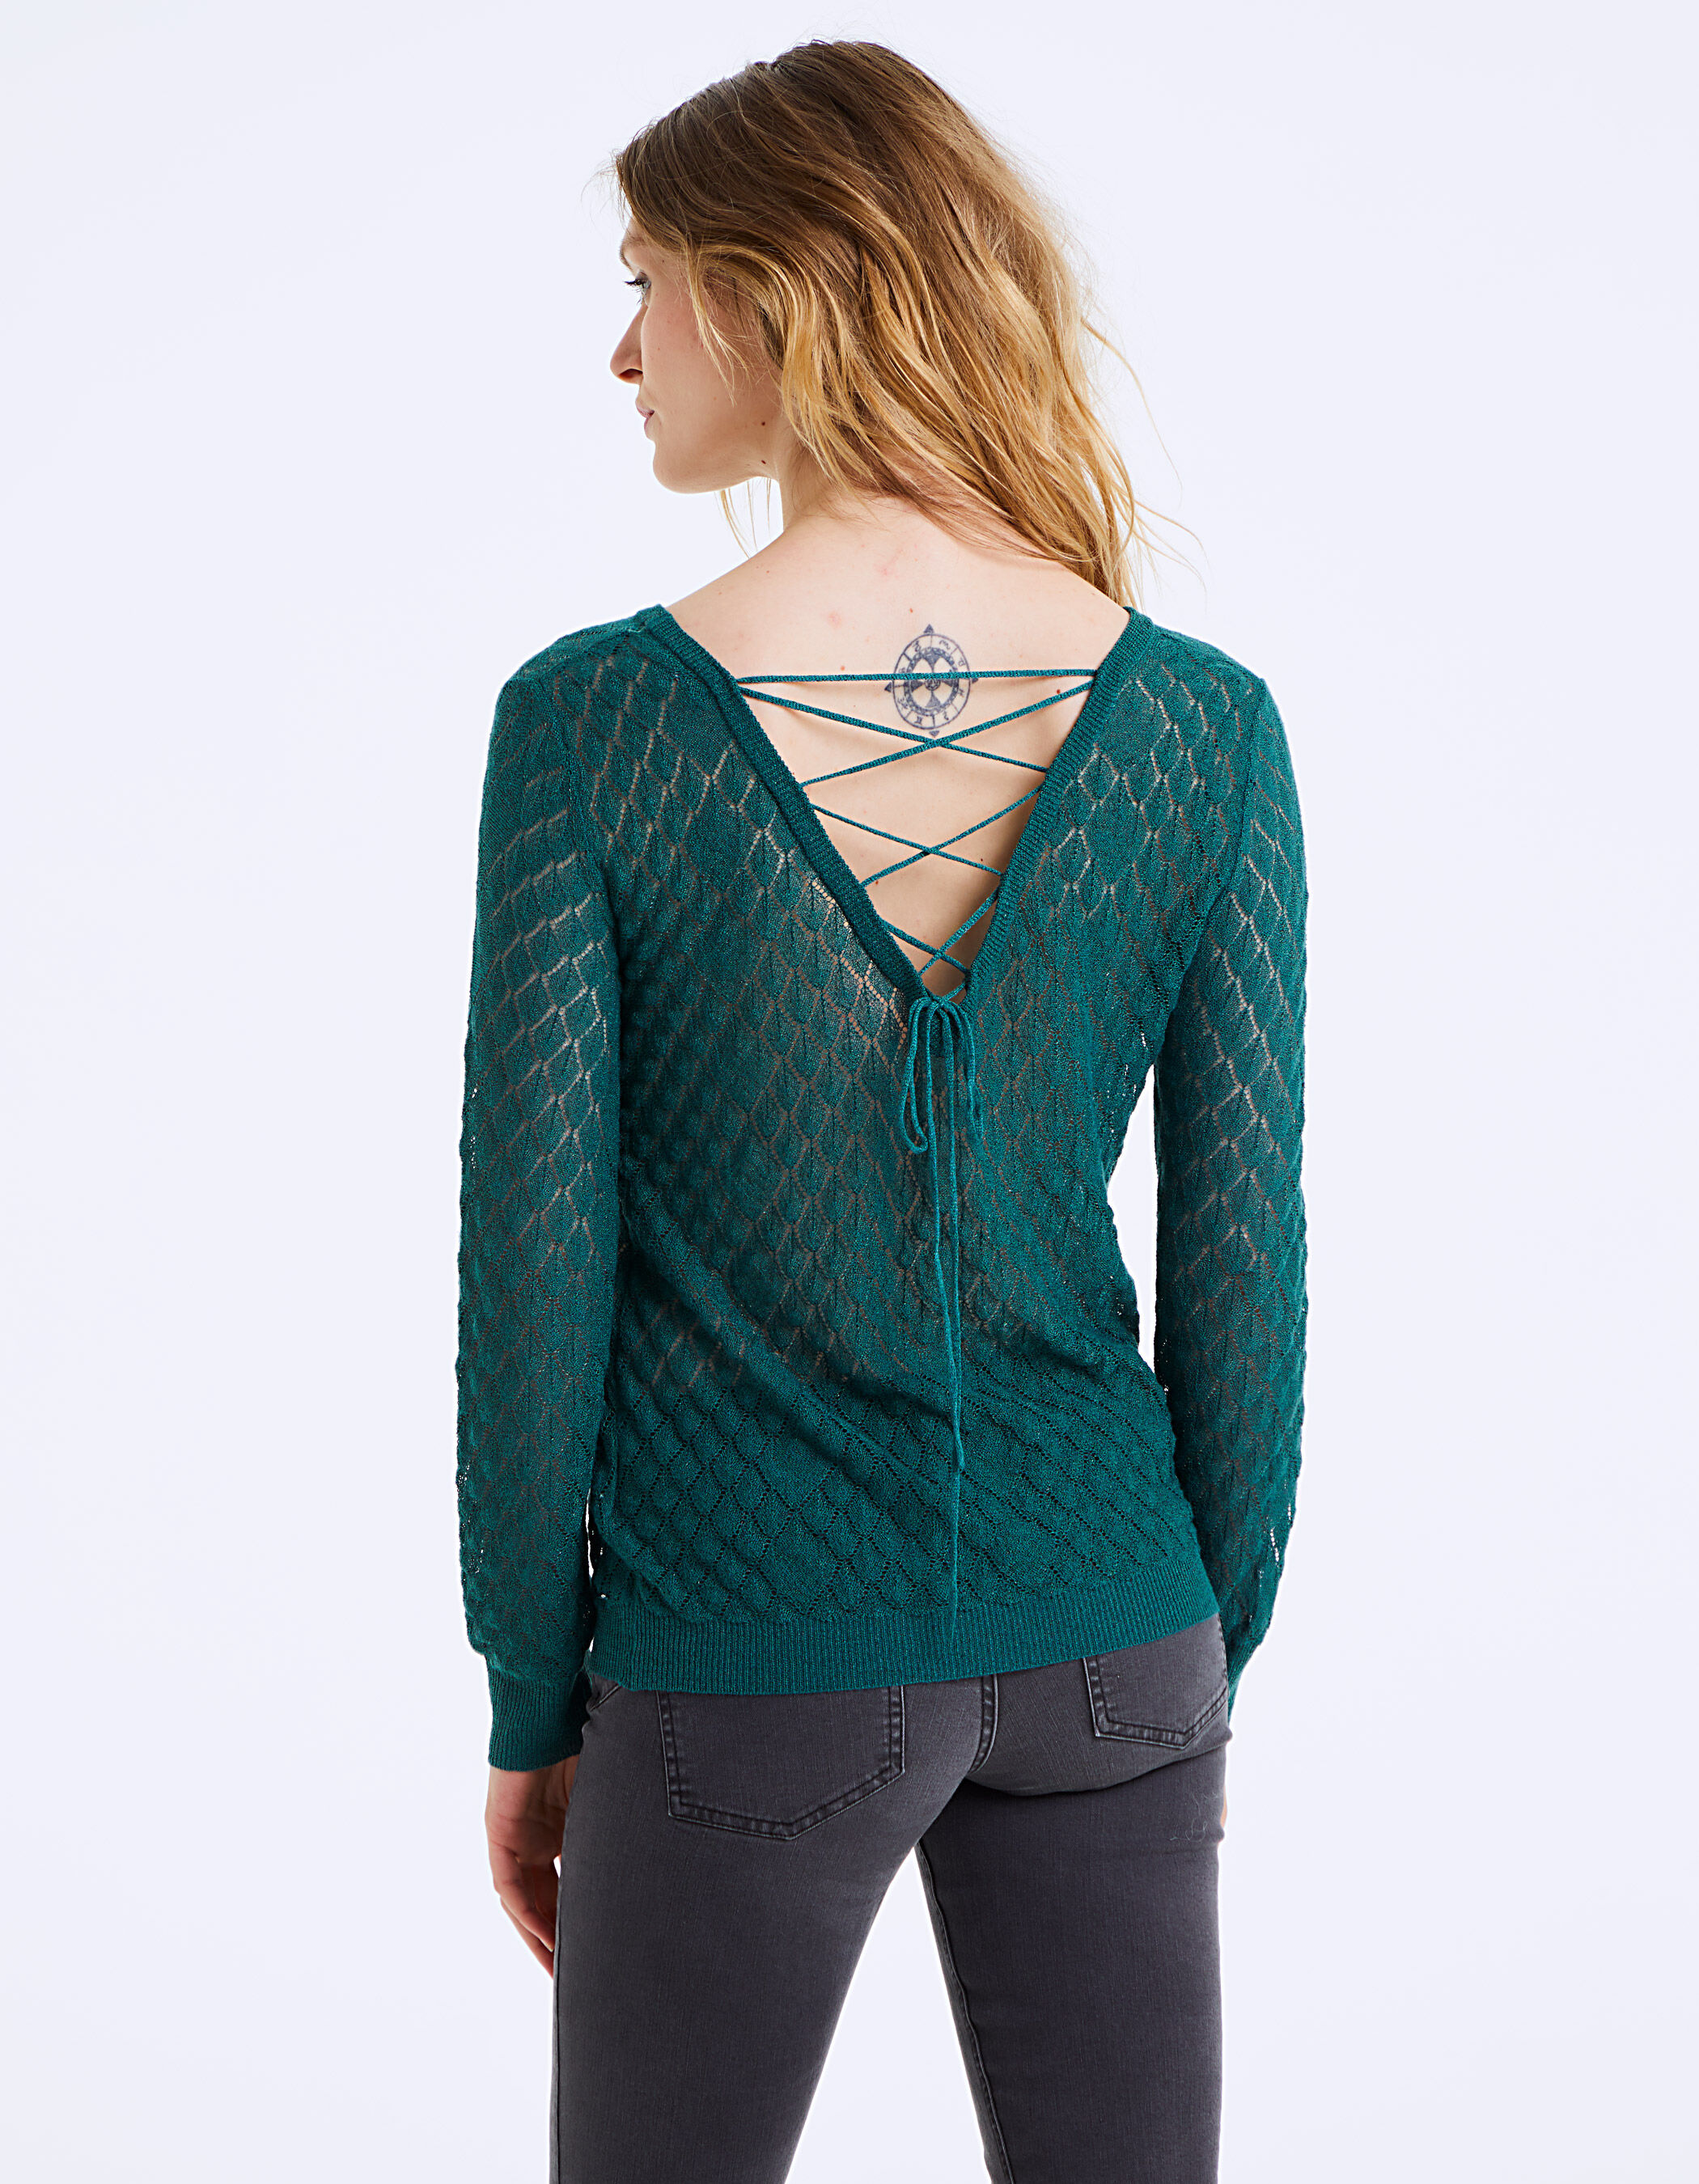 Women's openwork viscose-rich lace back sweater